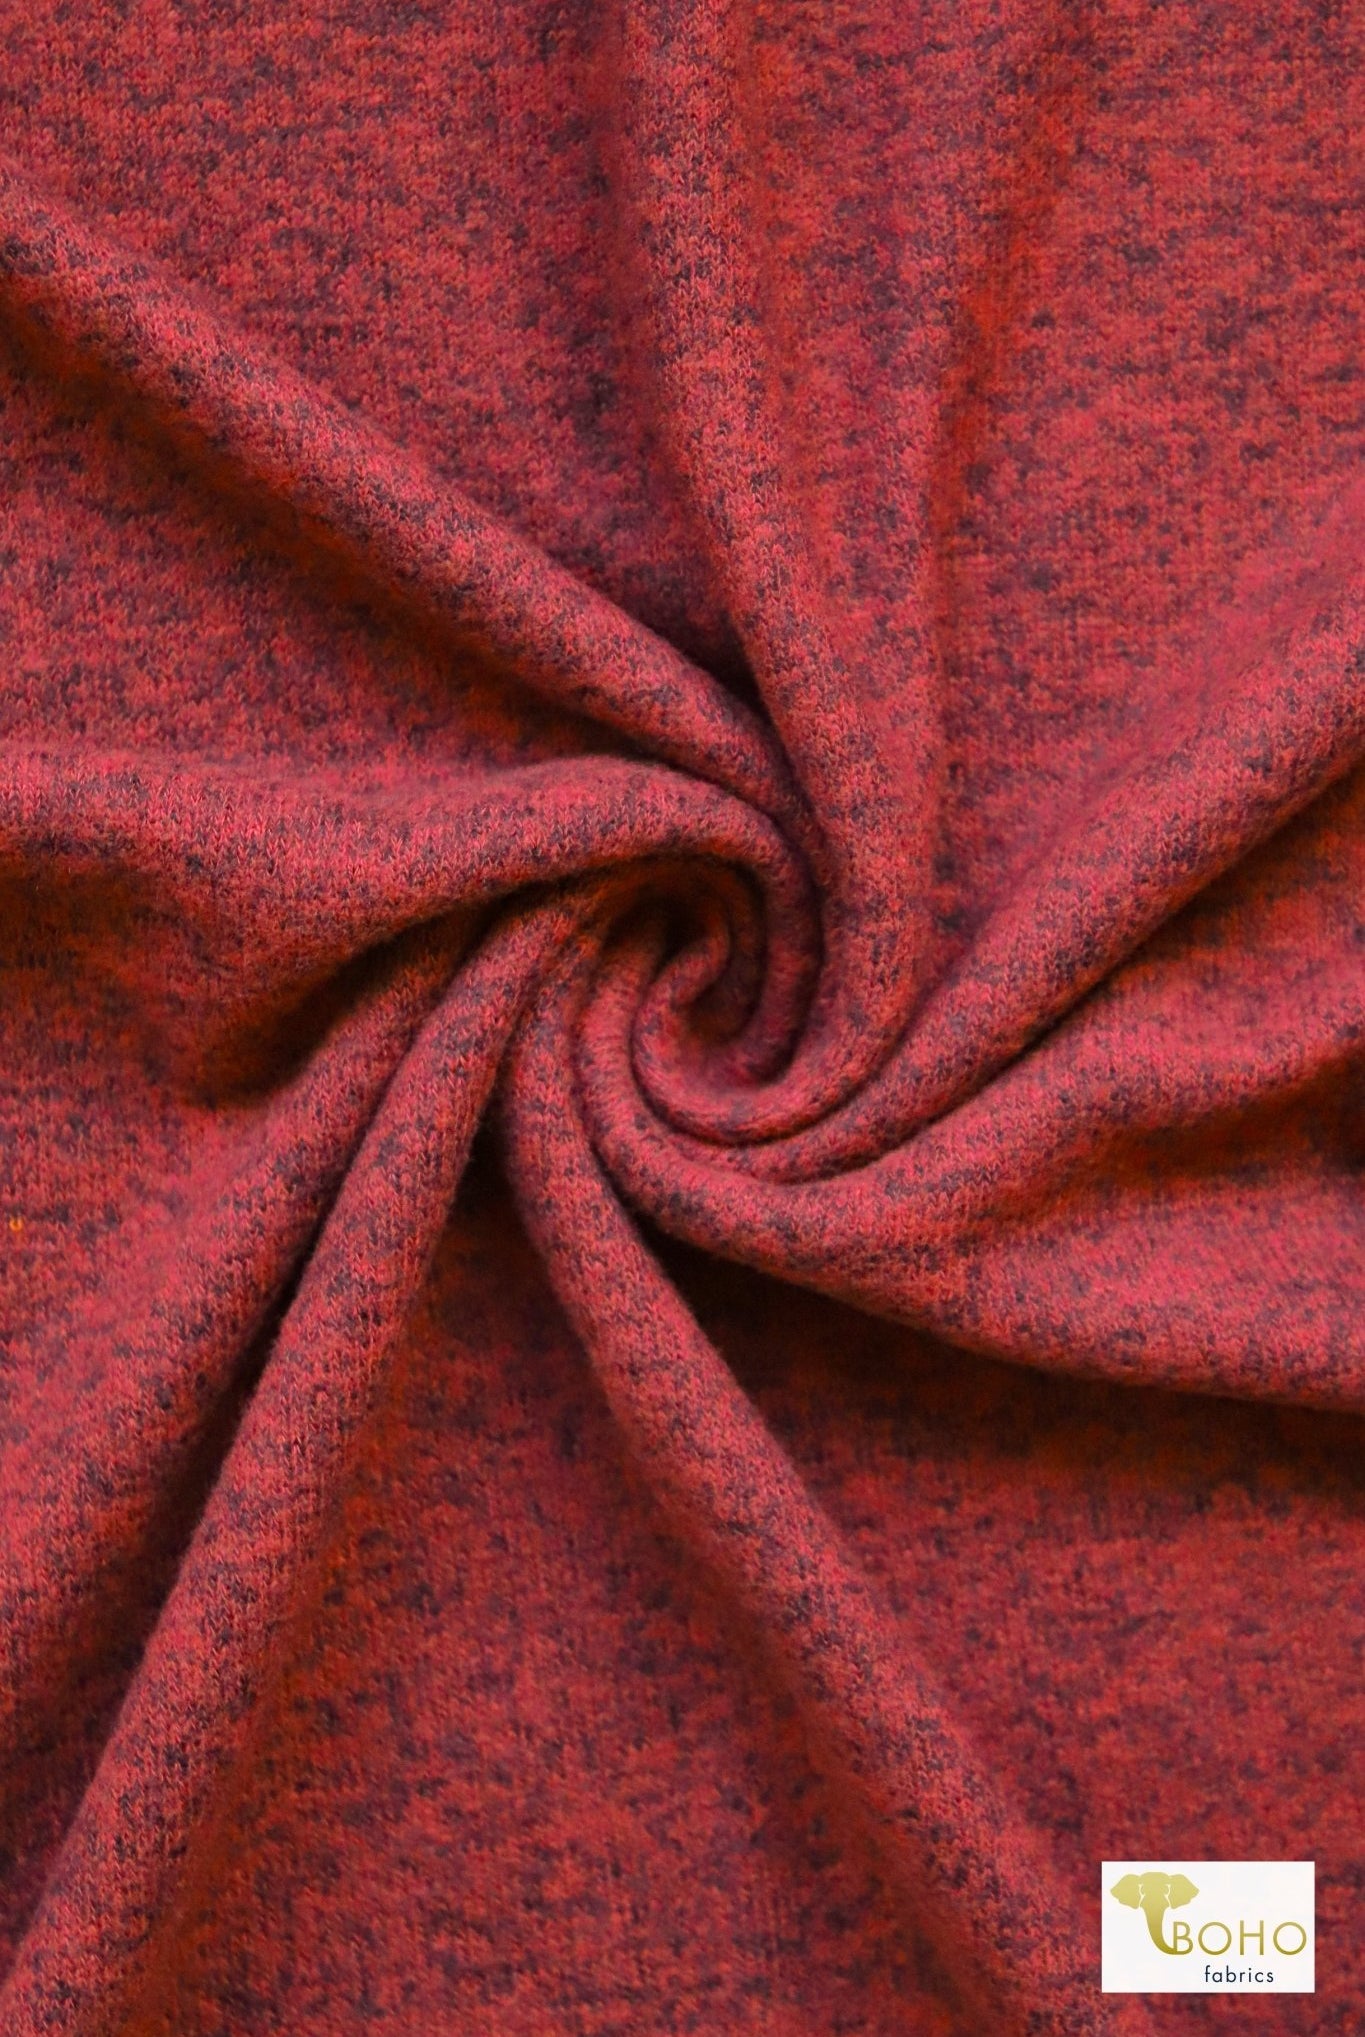 Cinnamon Stick Red, Brushed Sweater Solid Knit Fabric - Boho Fabrics